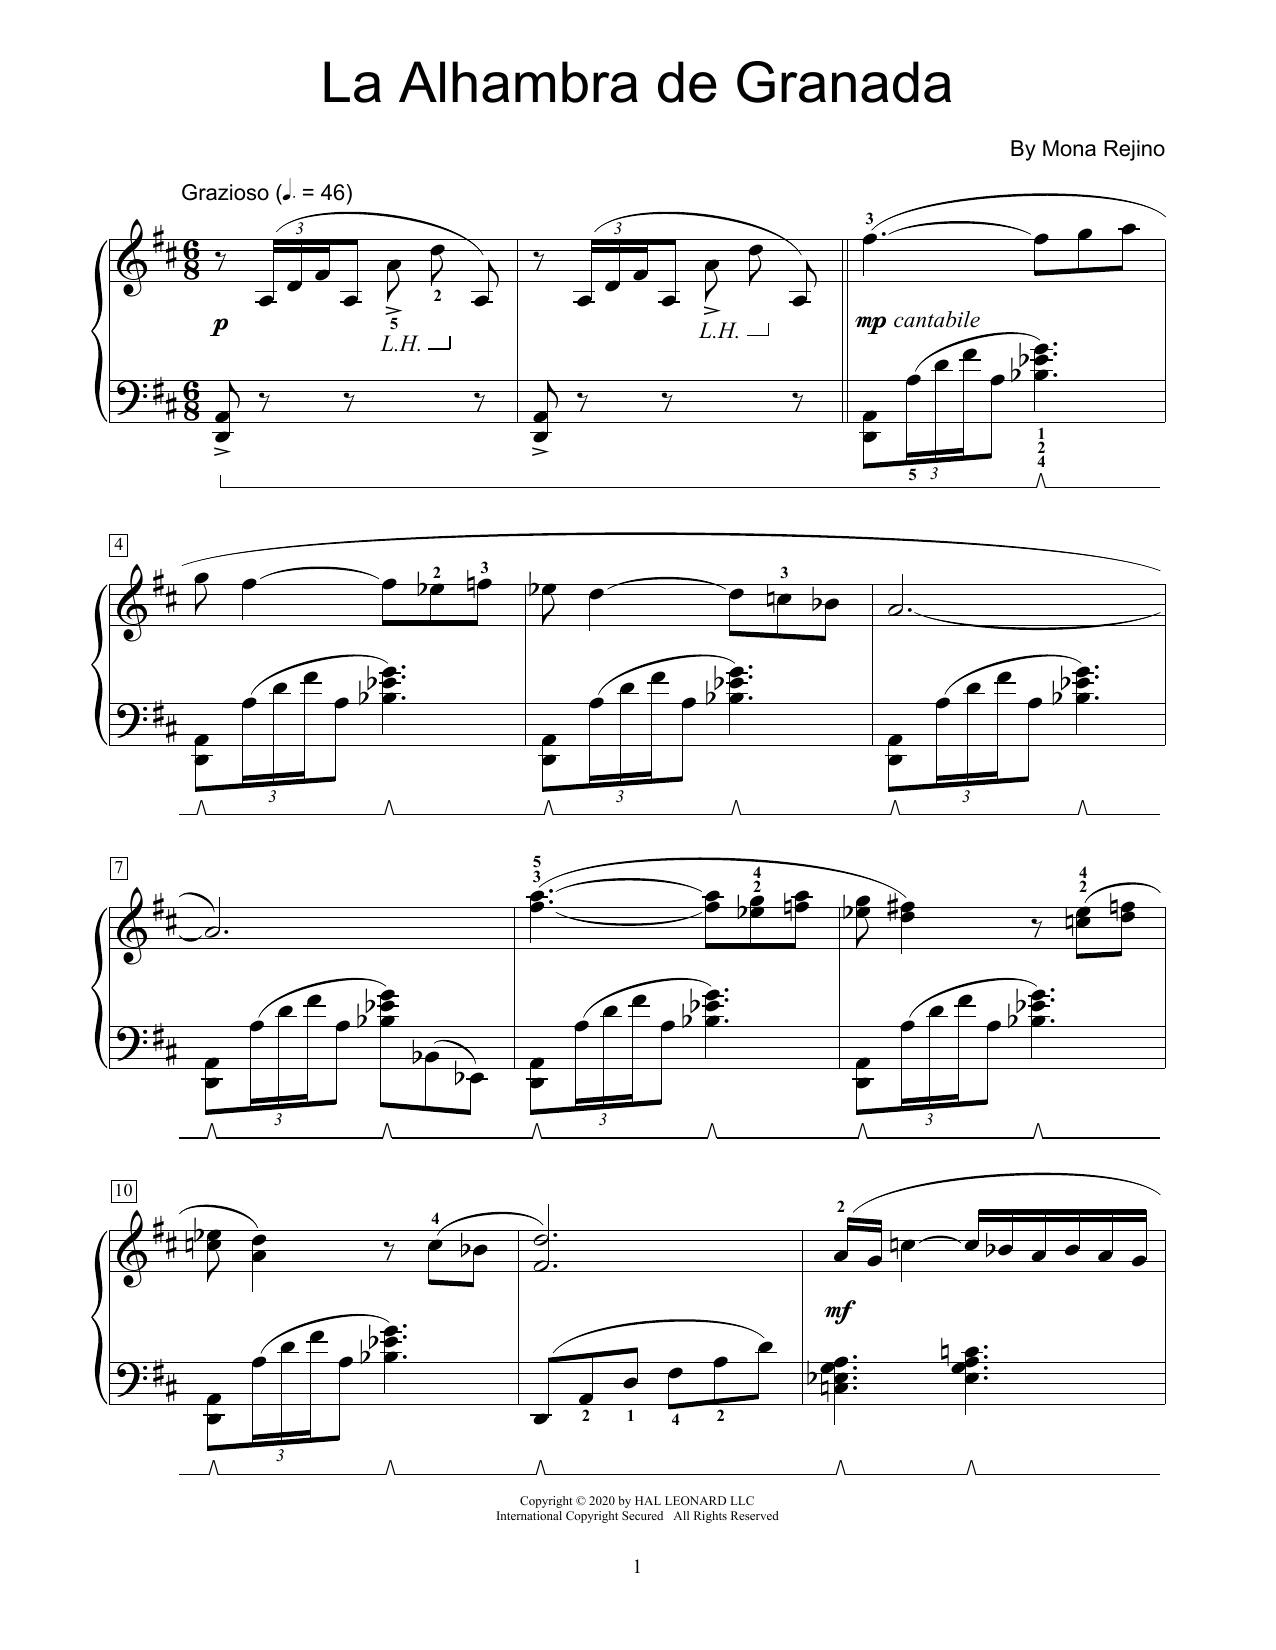 Download Mona Rejino La Alhambra De Granada Sheet Music and learn how to play Educational Piano PDF digital score in minutes